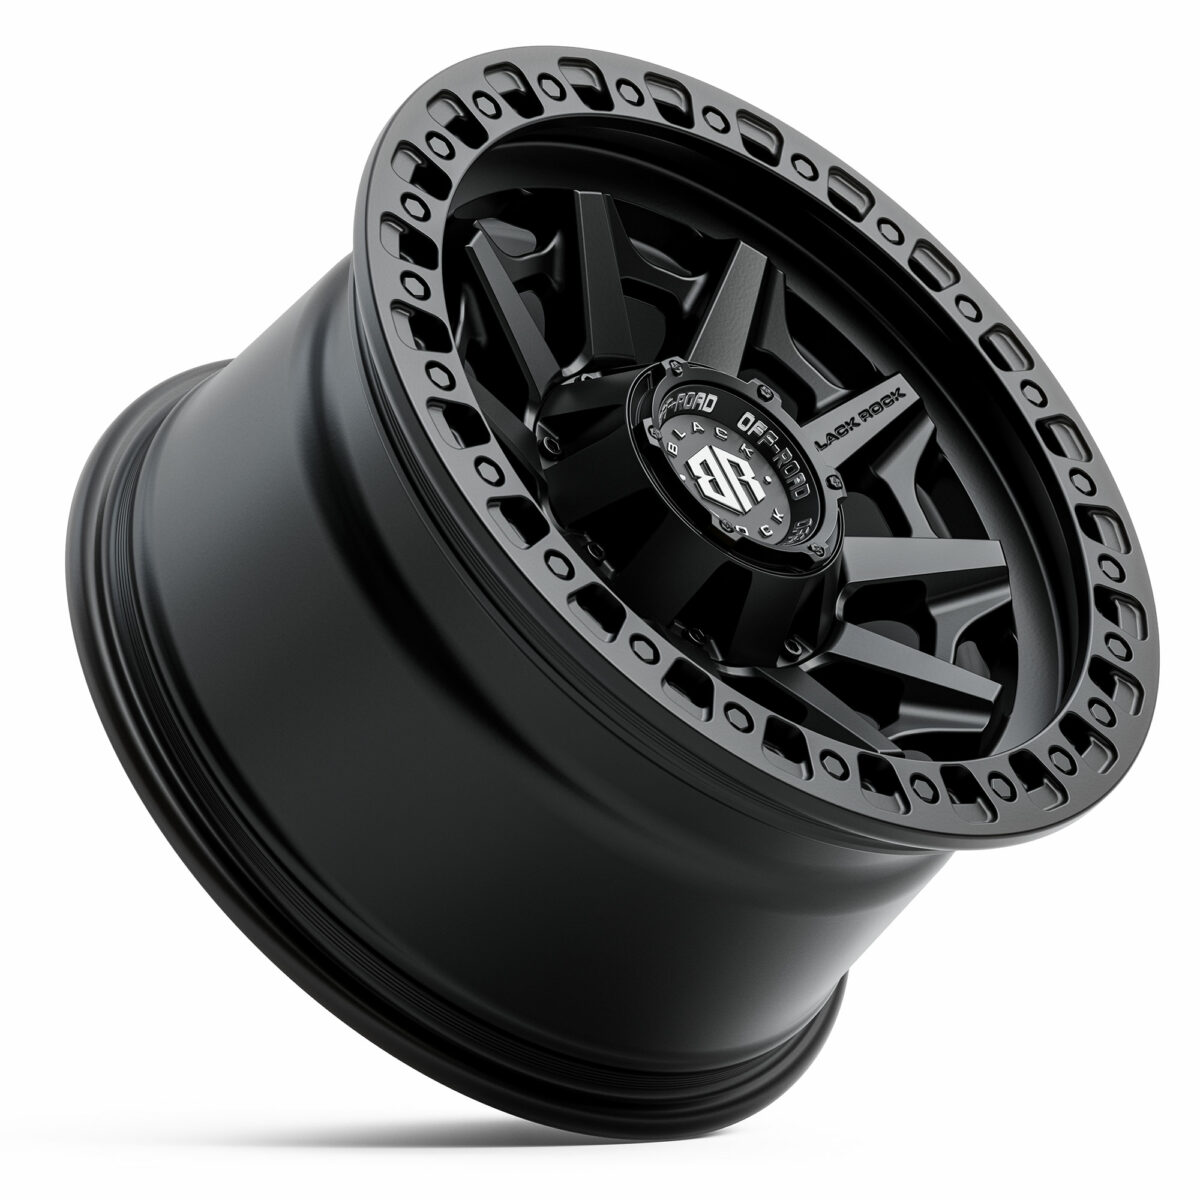 Black Rock Cage Satin Black 4x4 Wheels Off-Road Rims 17 inch 18 inch